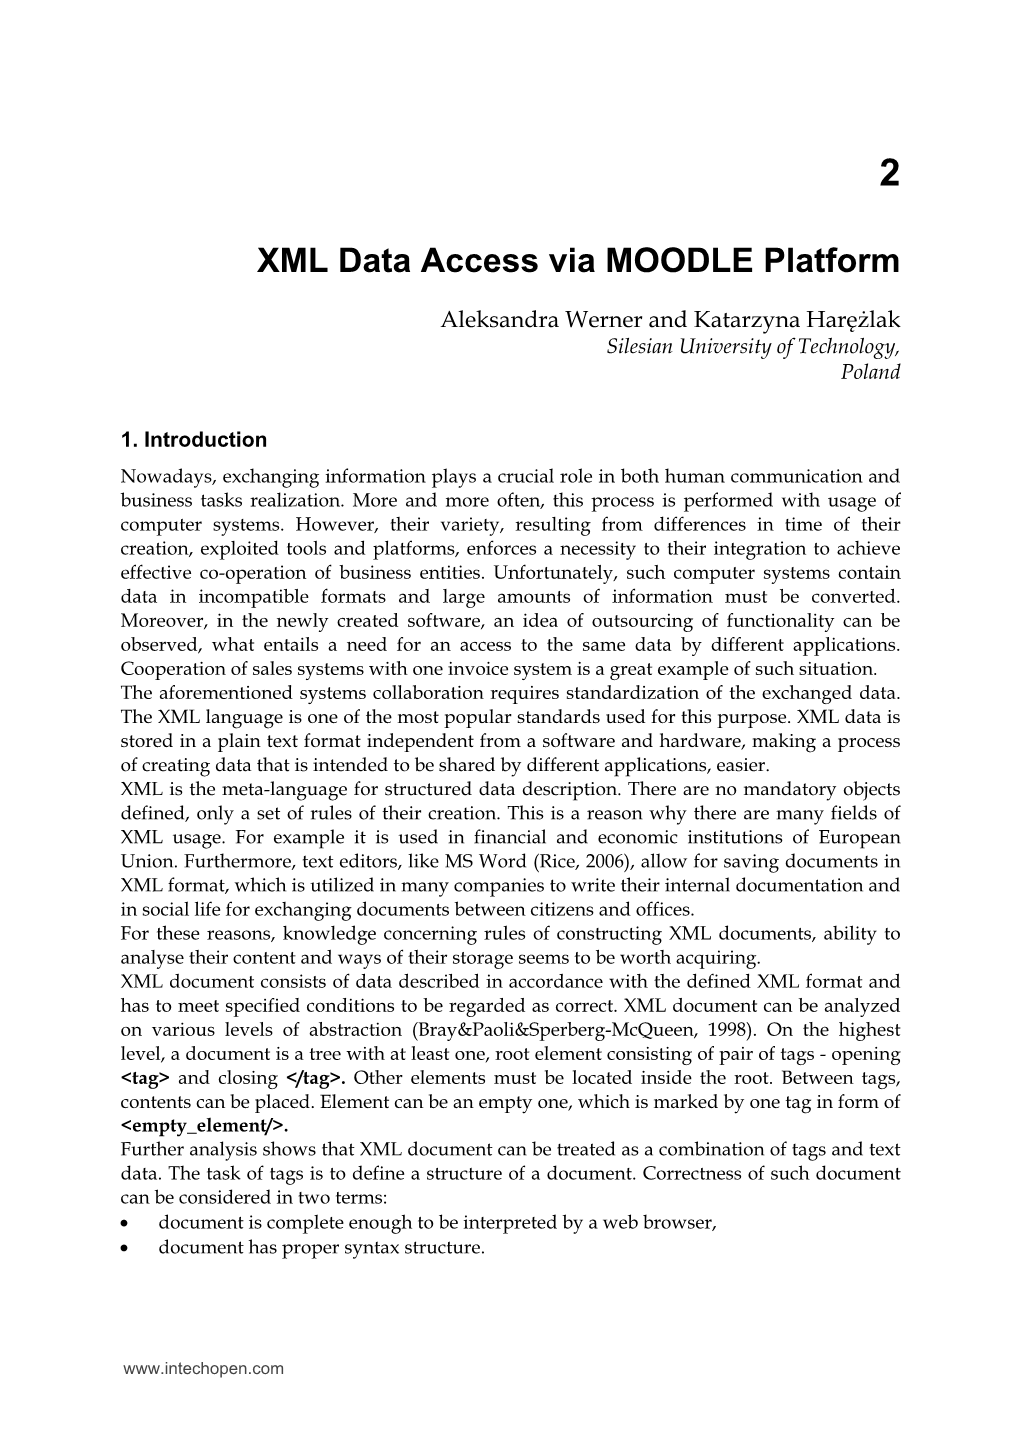 XML Data Access Via MOODLE Platform